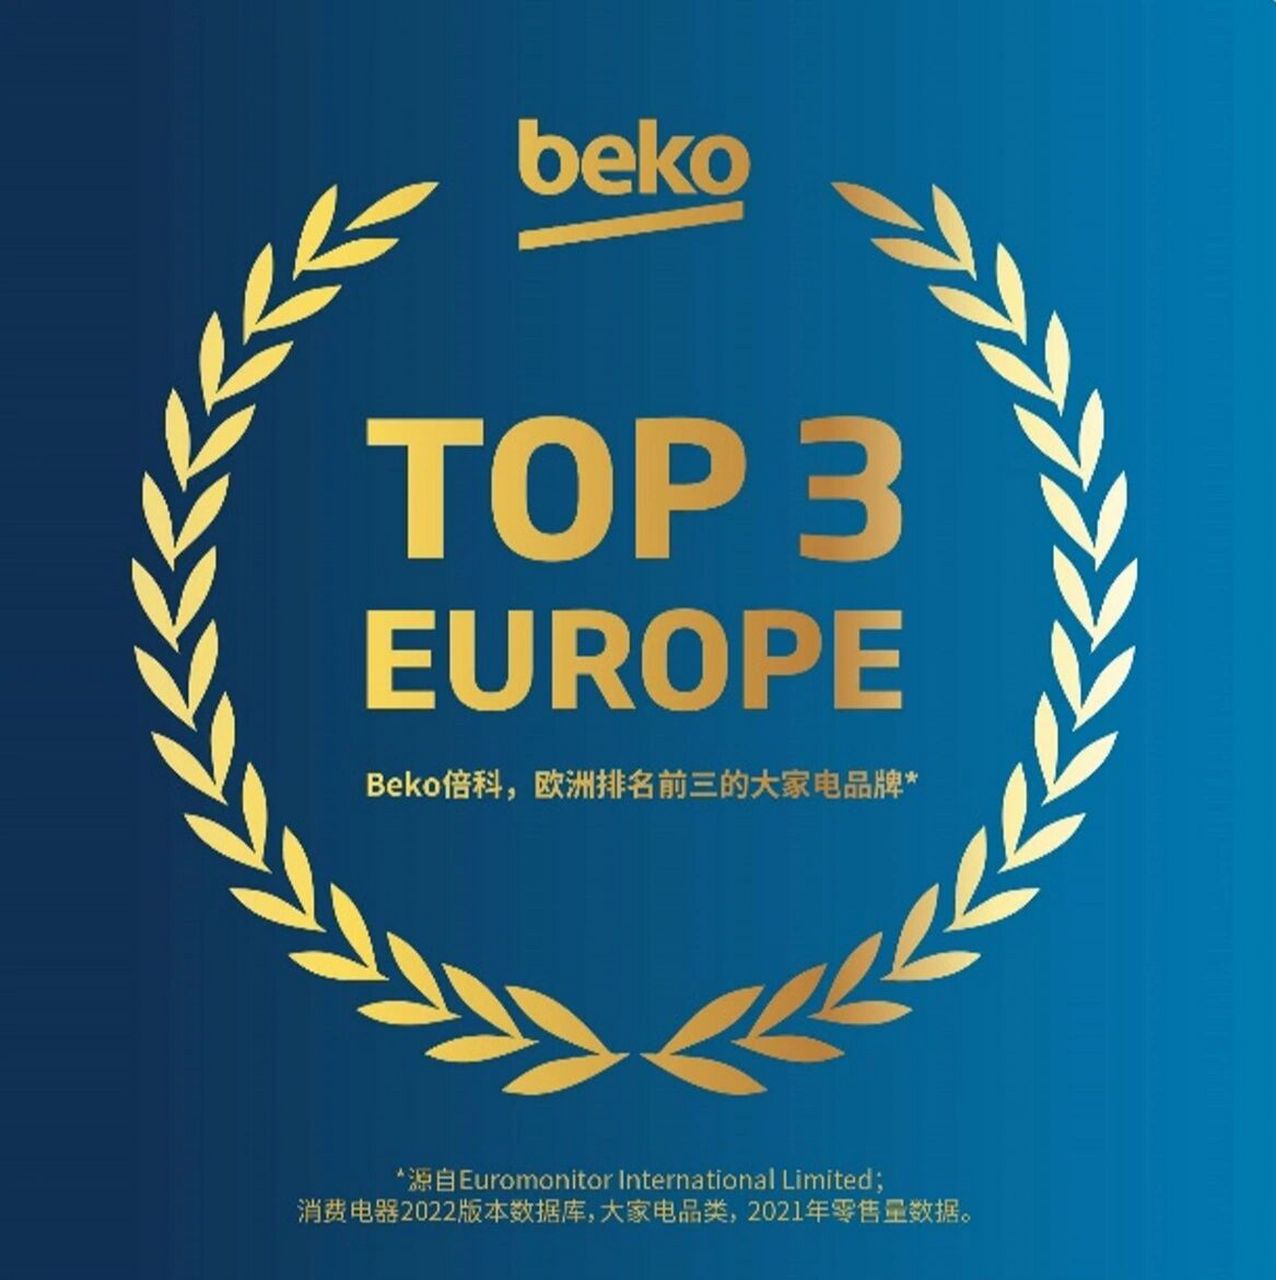 beko倍科  欧洲排名前三的大家电品牌 全球家电巨头beko倍科源于英国